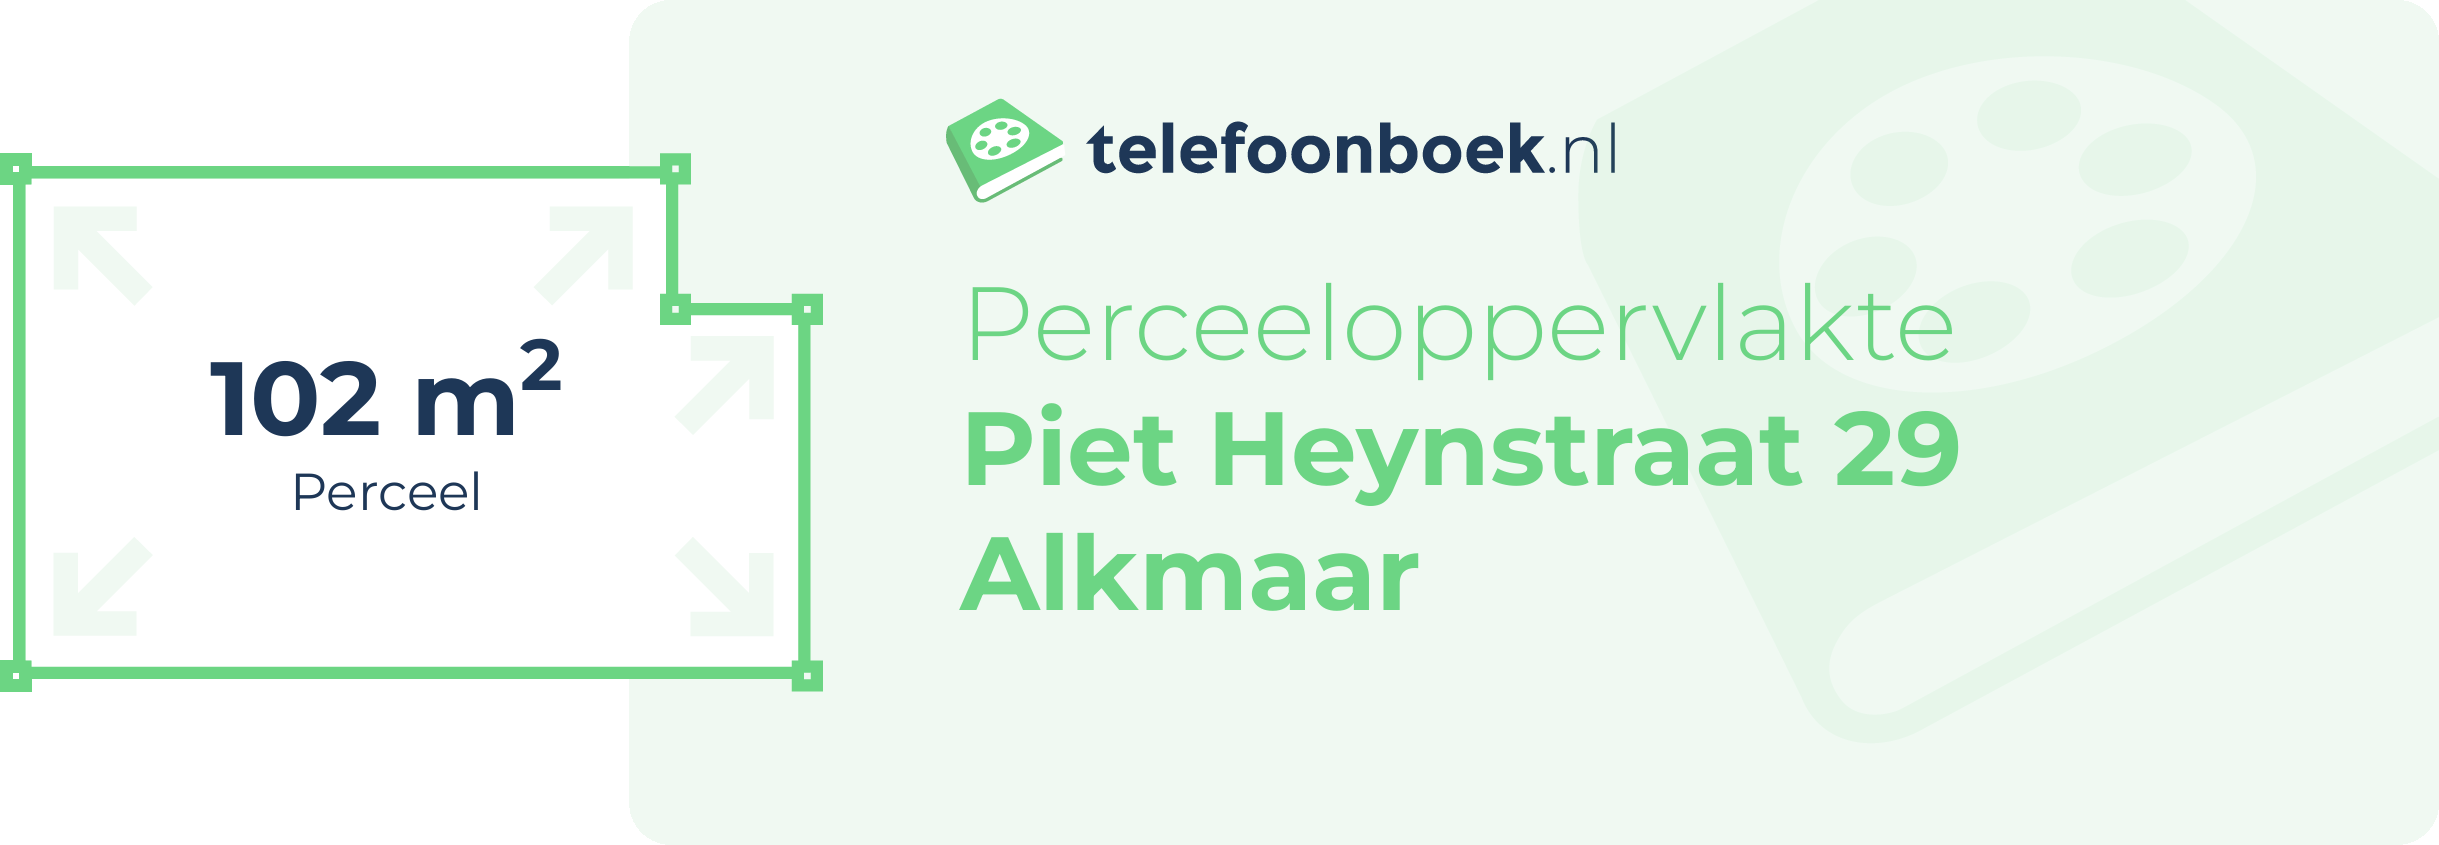 Perceeloppervlakte Piet Heynstraat 29 Alkmaar